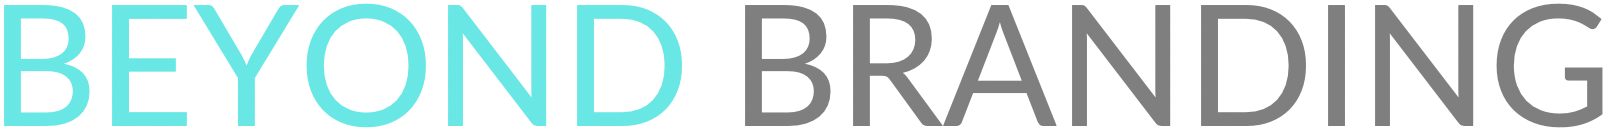 Personal Branding Logo